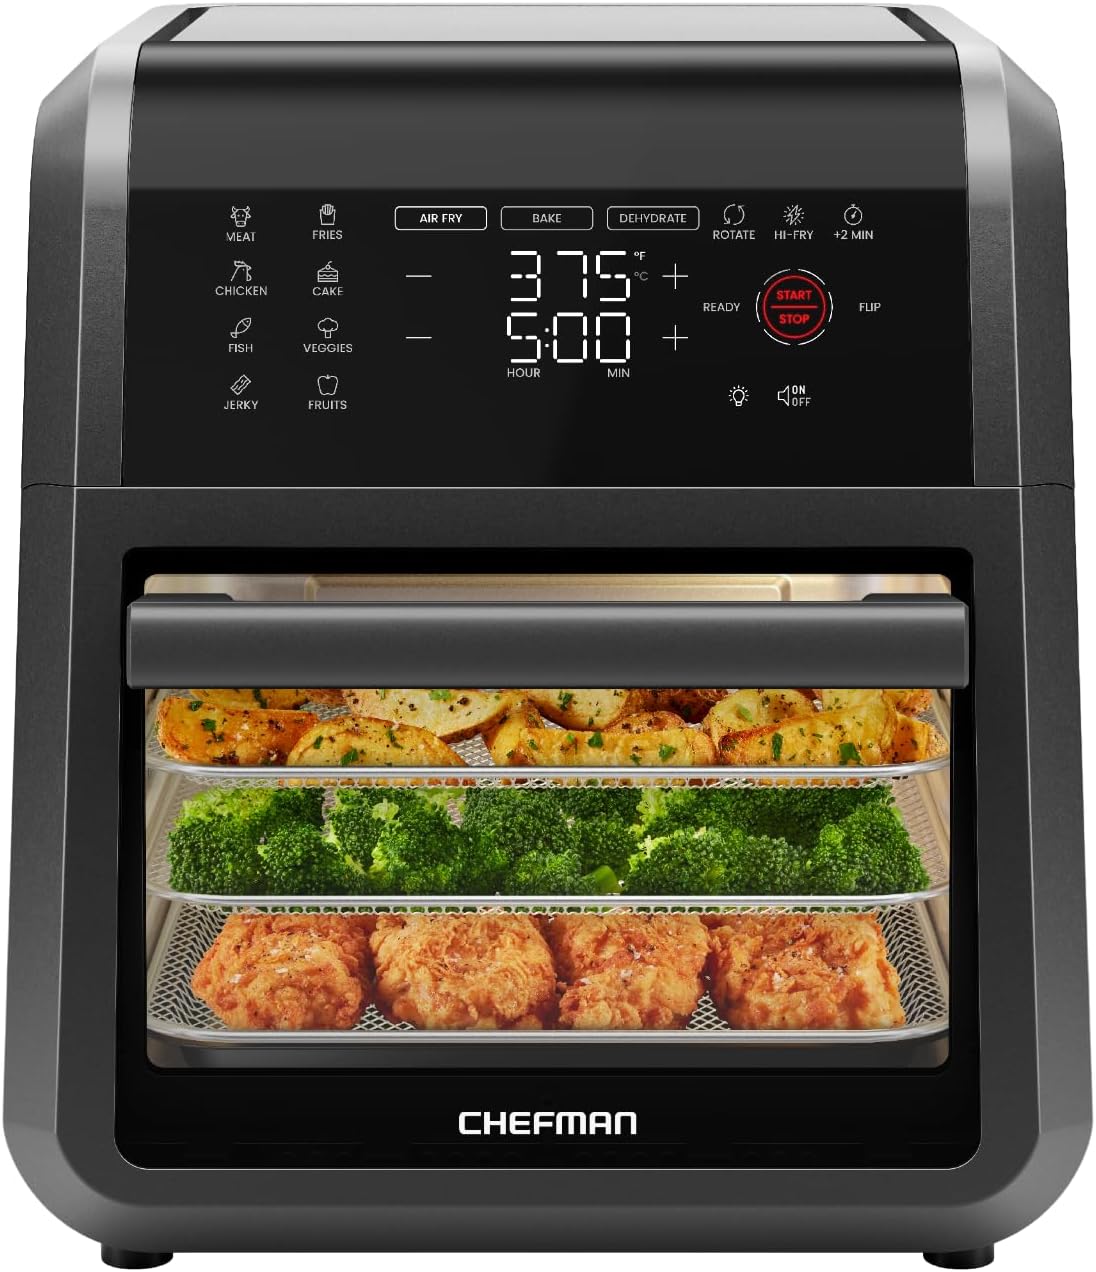 Chefman 12-Quart Air Fryer Oven Review